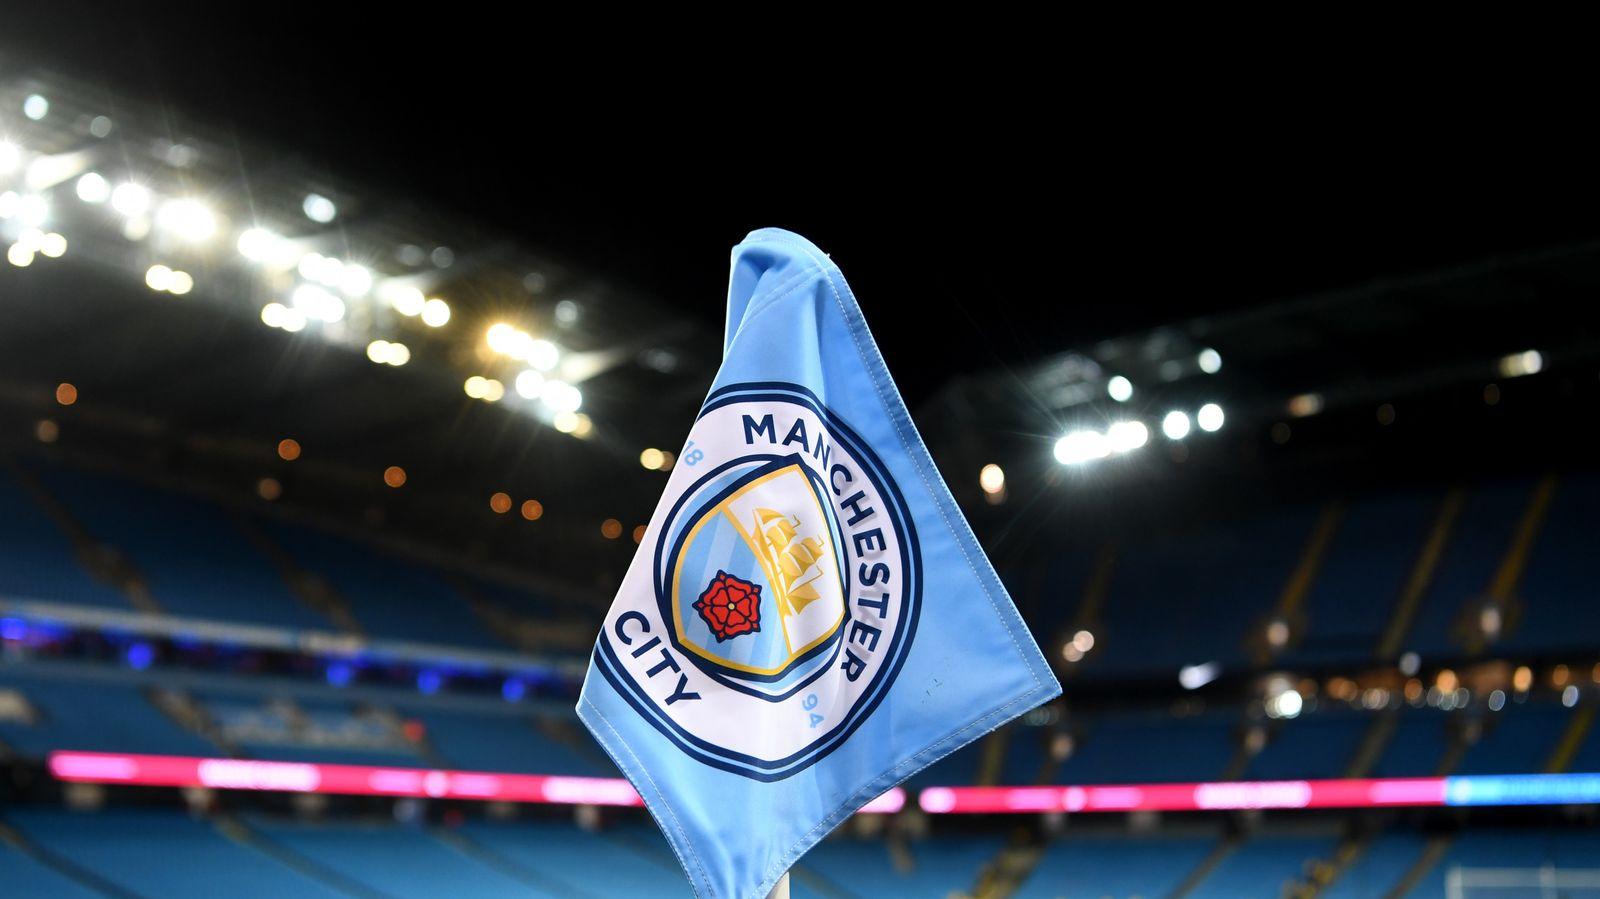 Premier League open investigation into Manchester City Football